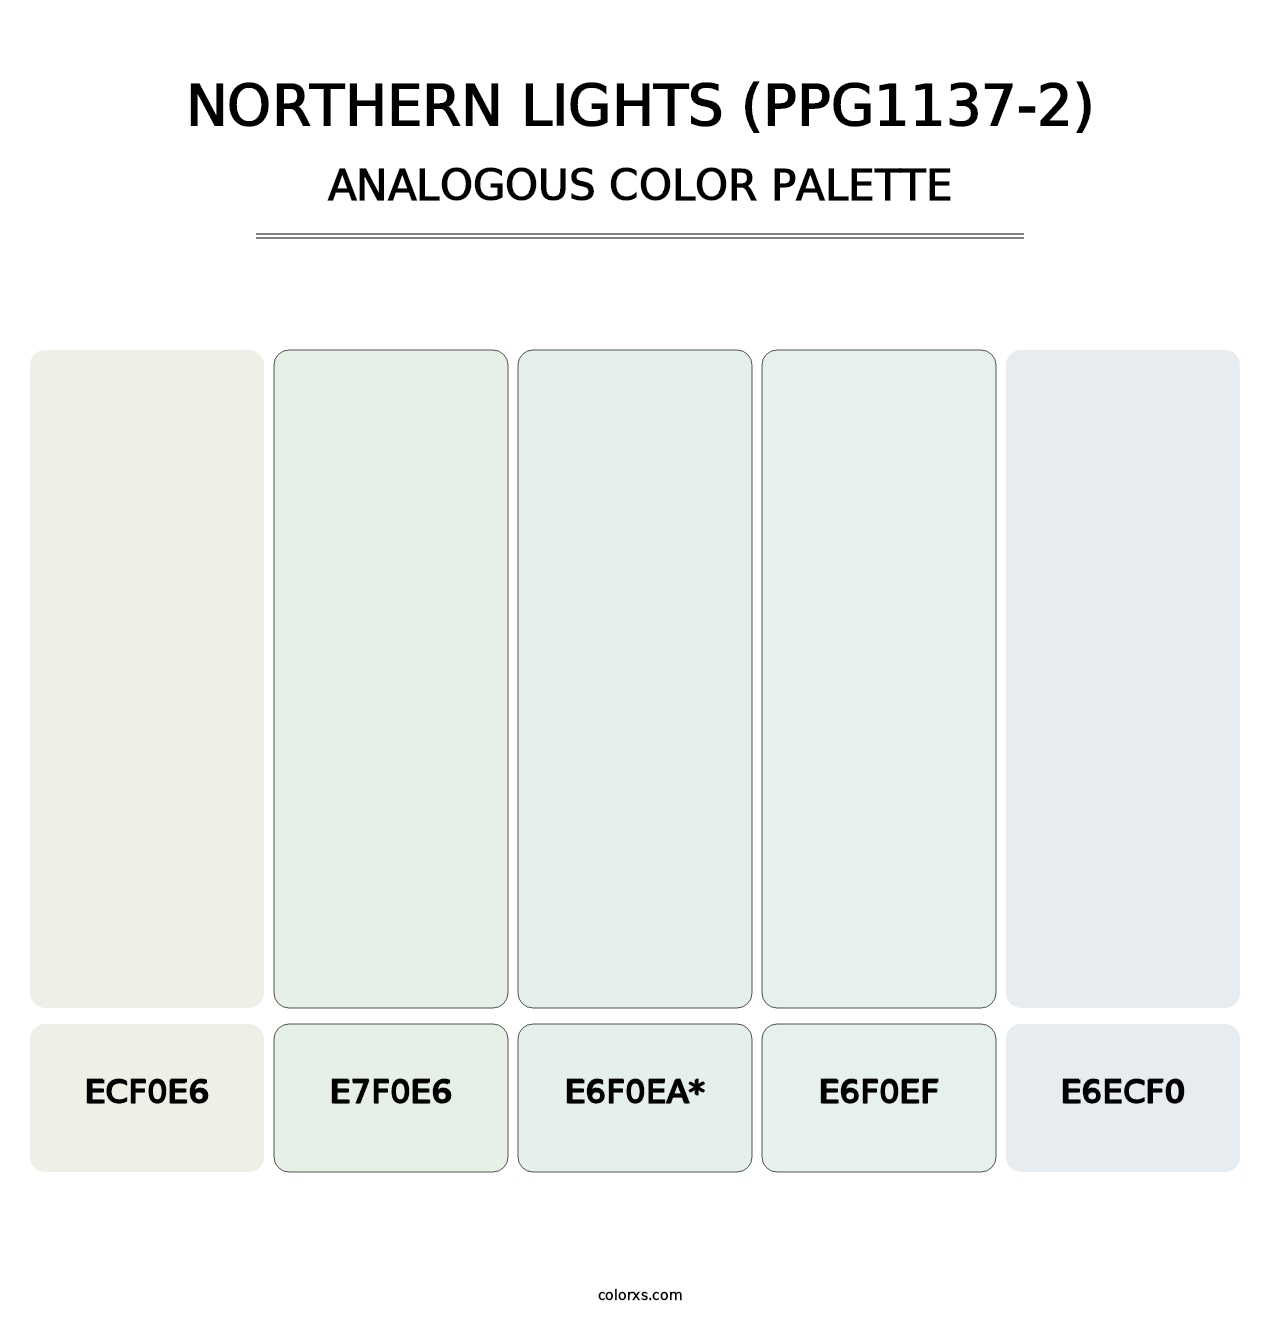 Northern Lights (PPG1137-2) - Analogous Color Palette